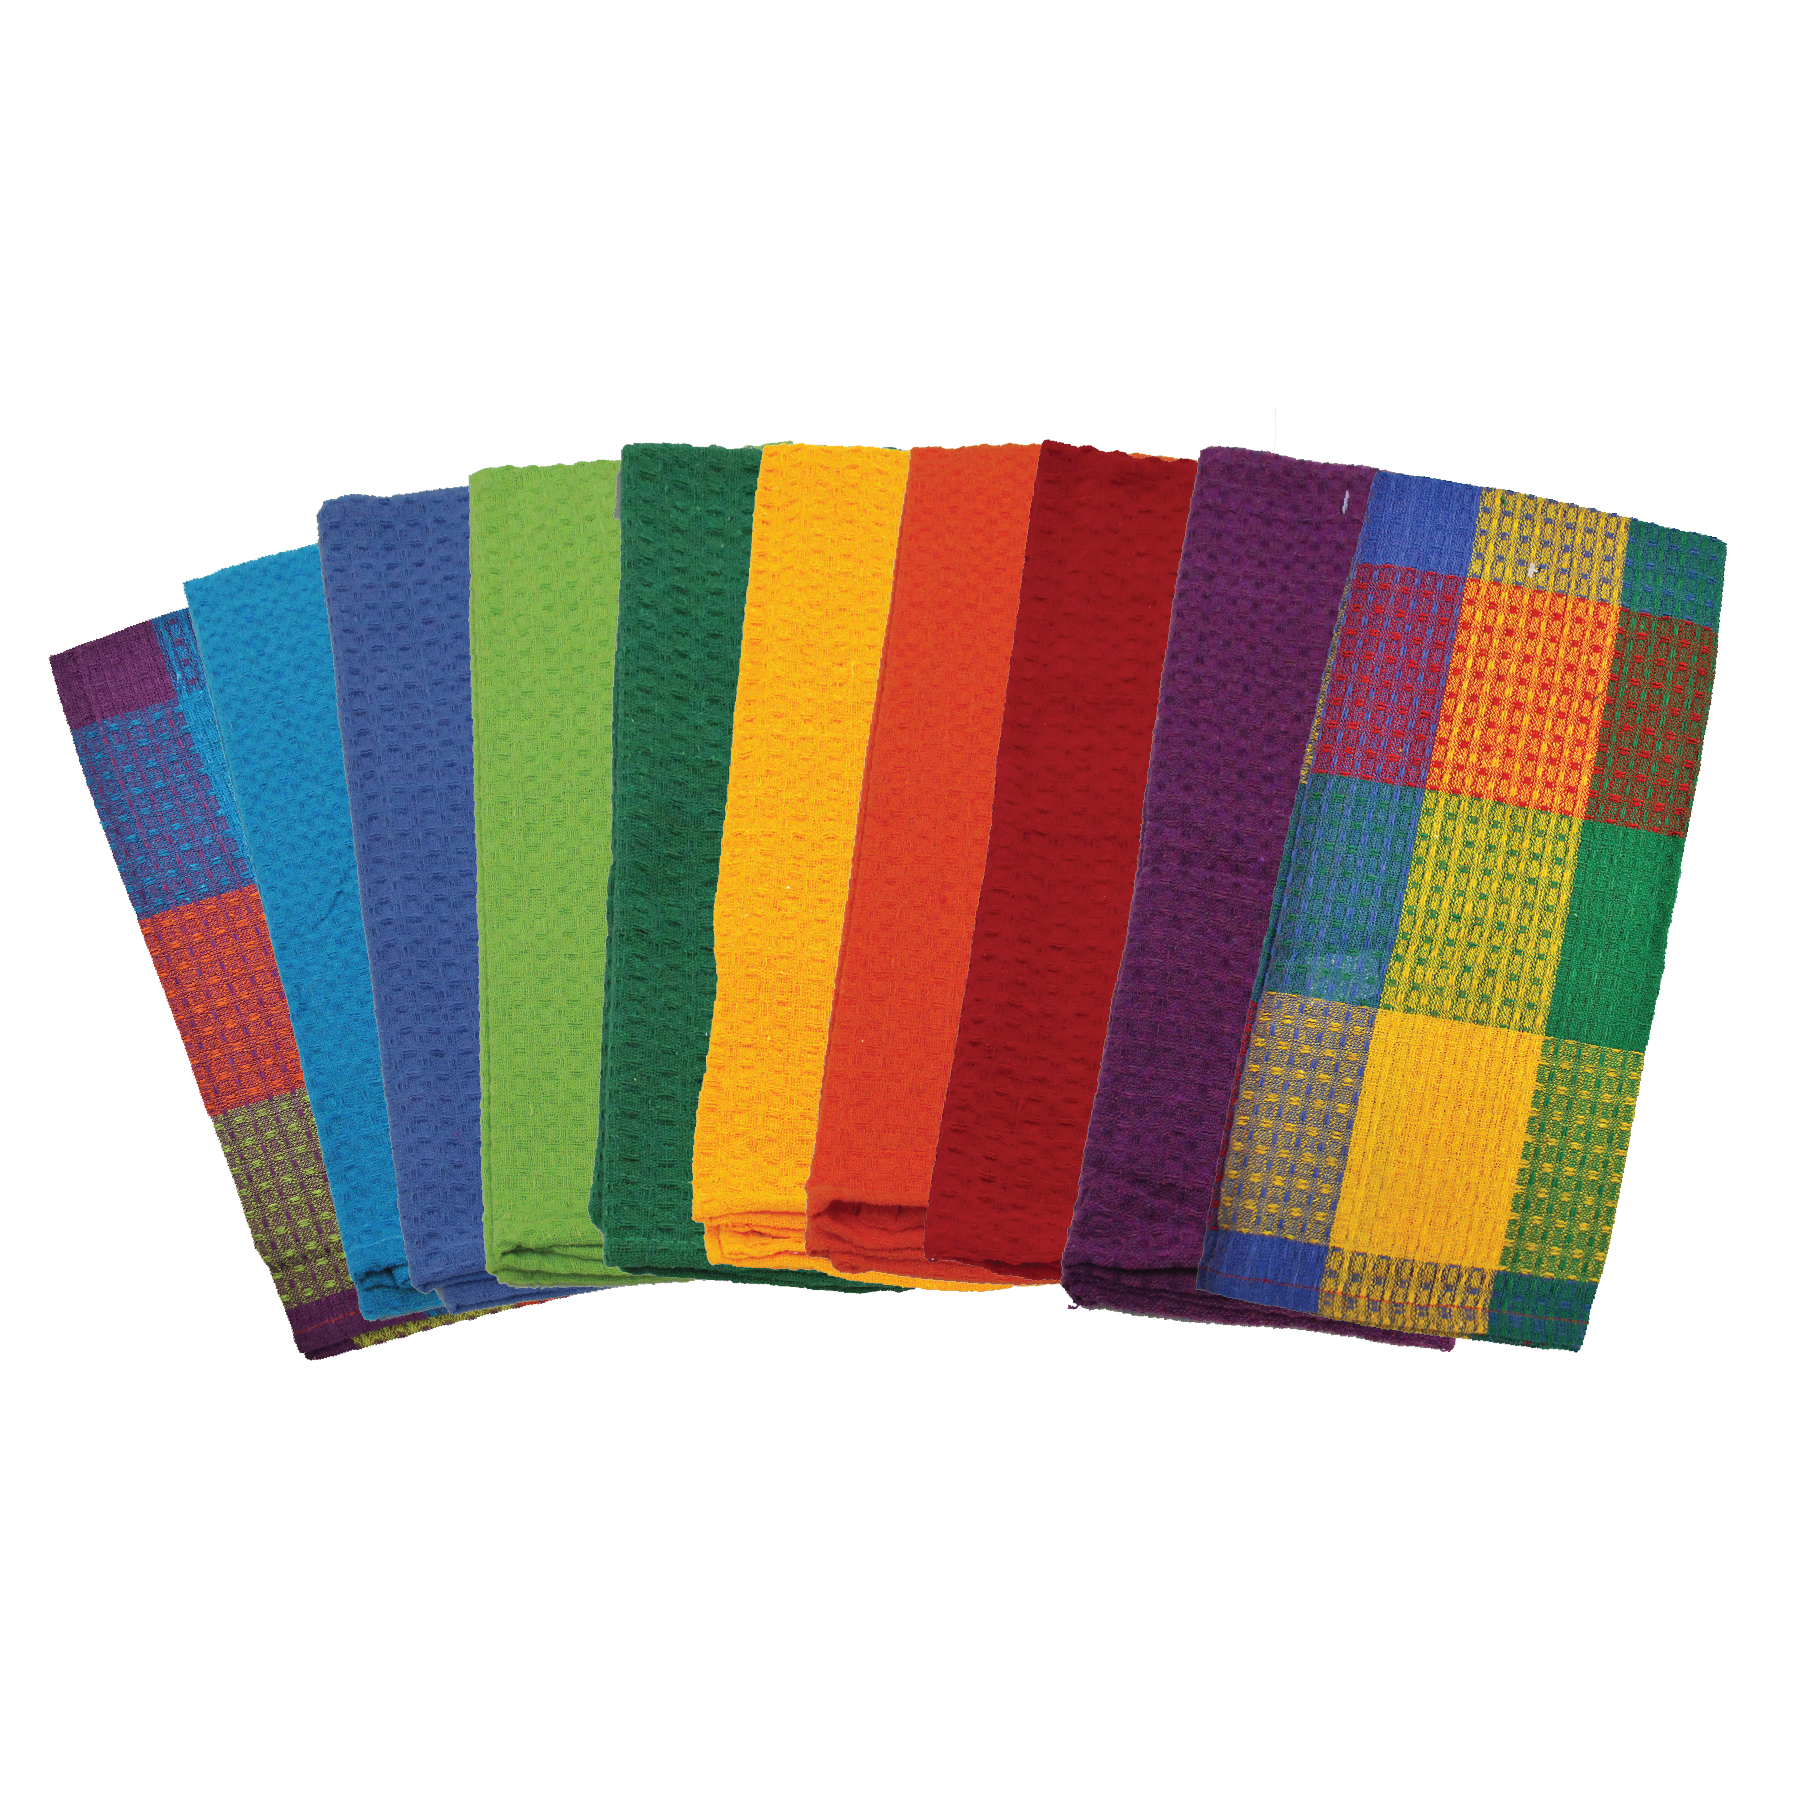 https://cottoncreations.com/content/uploads/2018/10/Colored-dish-cloth-towels.png